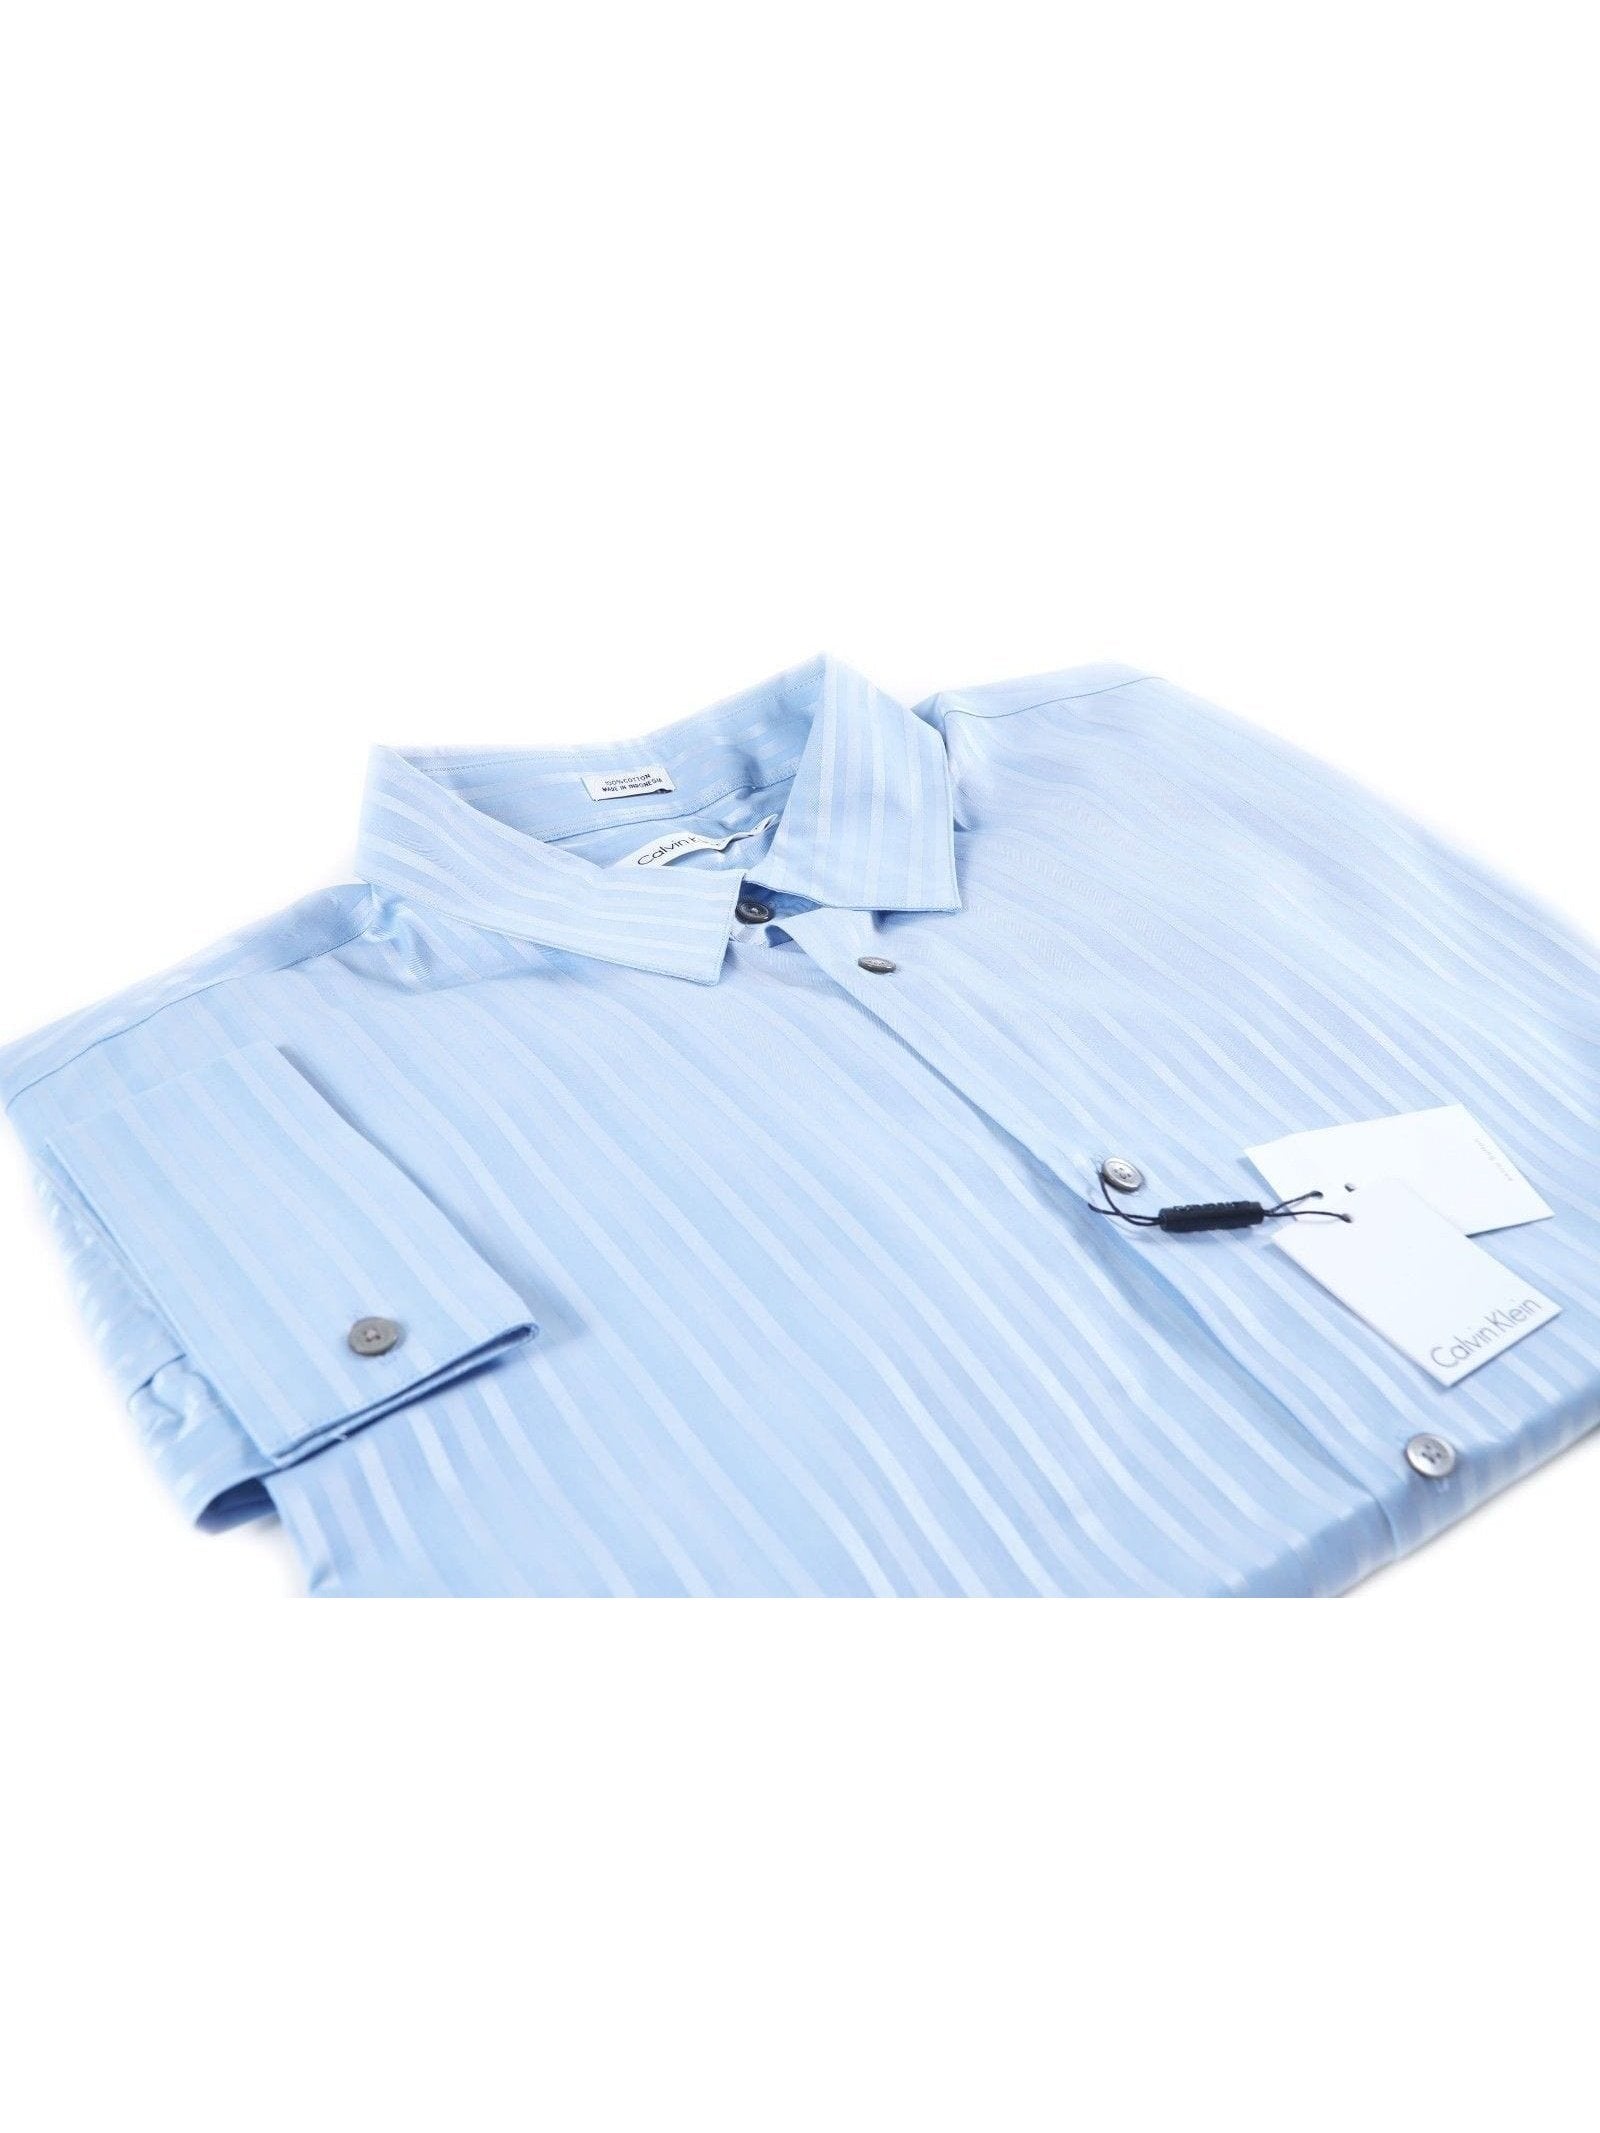 Calvin Klein Mens Blue Striped Classic Fit 100% Cotton French Cuff Dress  Shirt